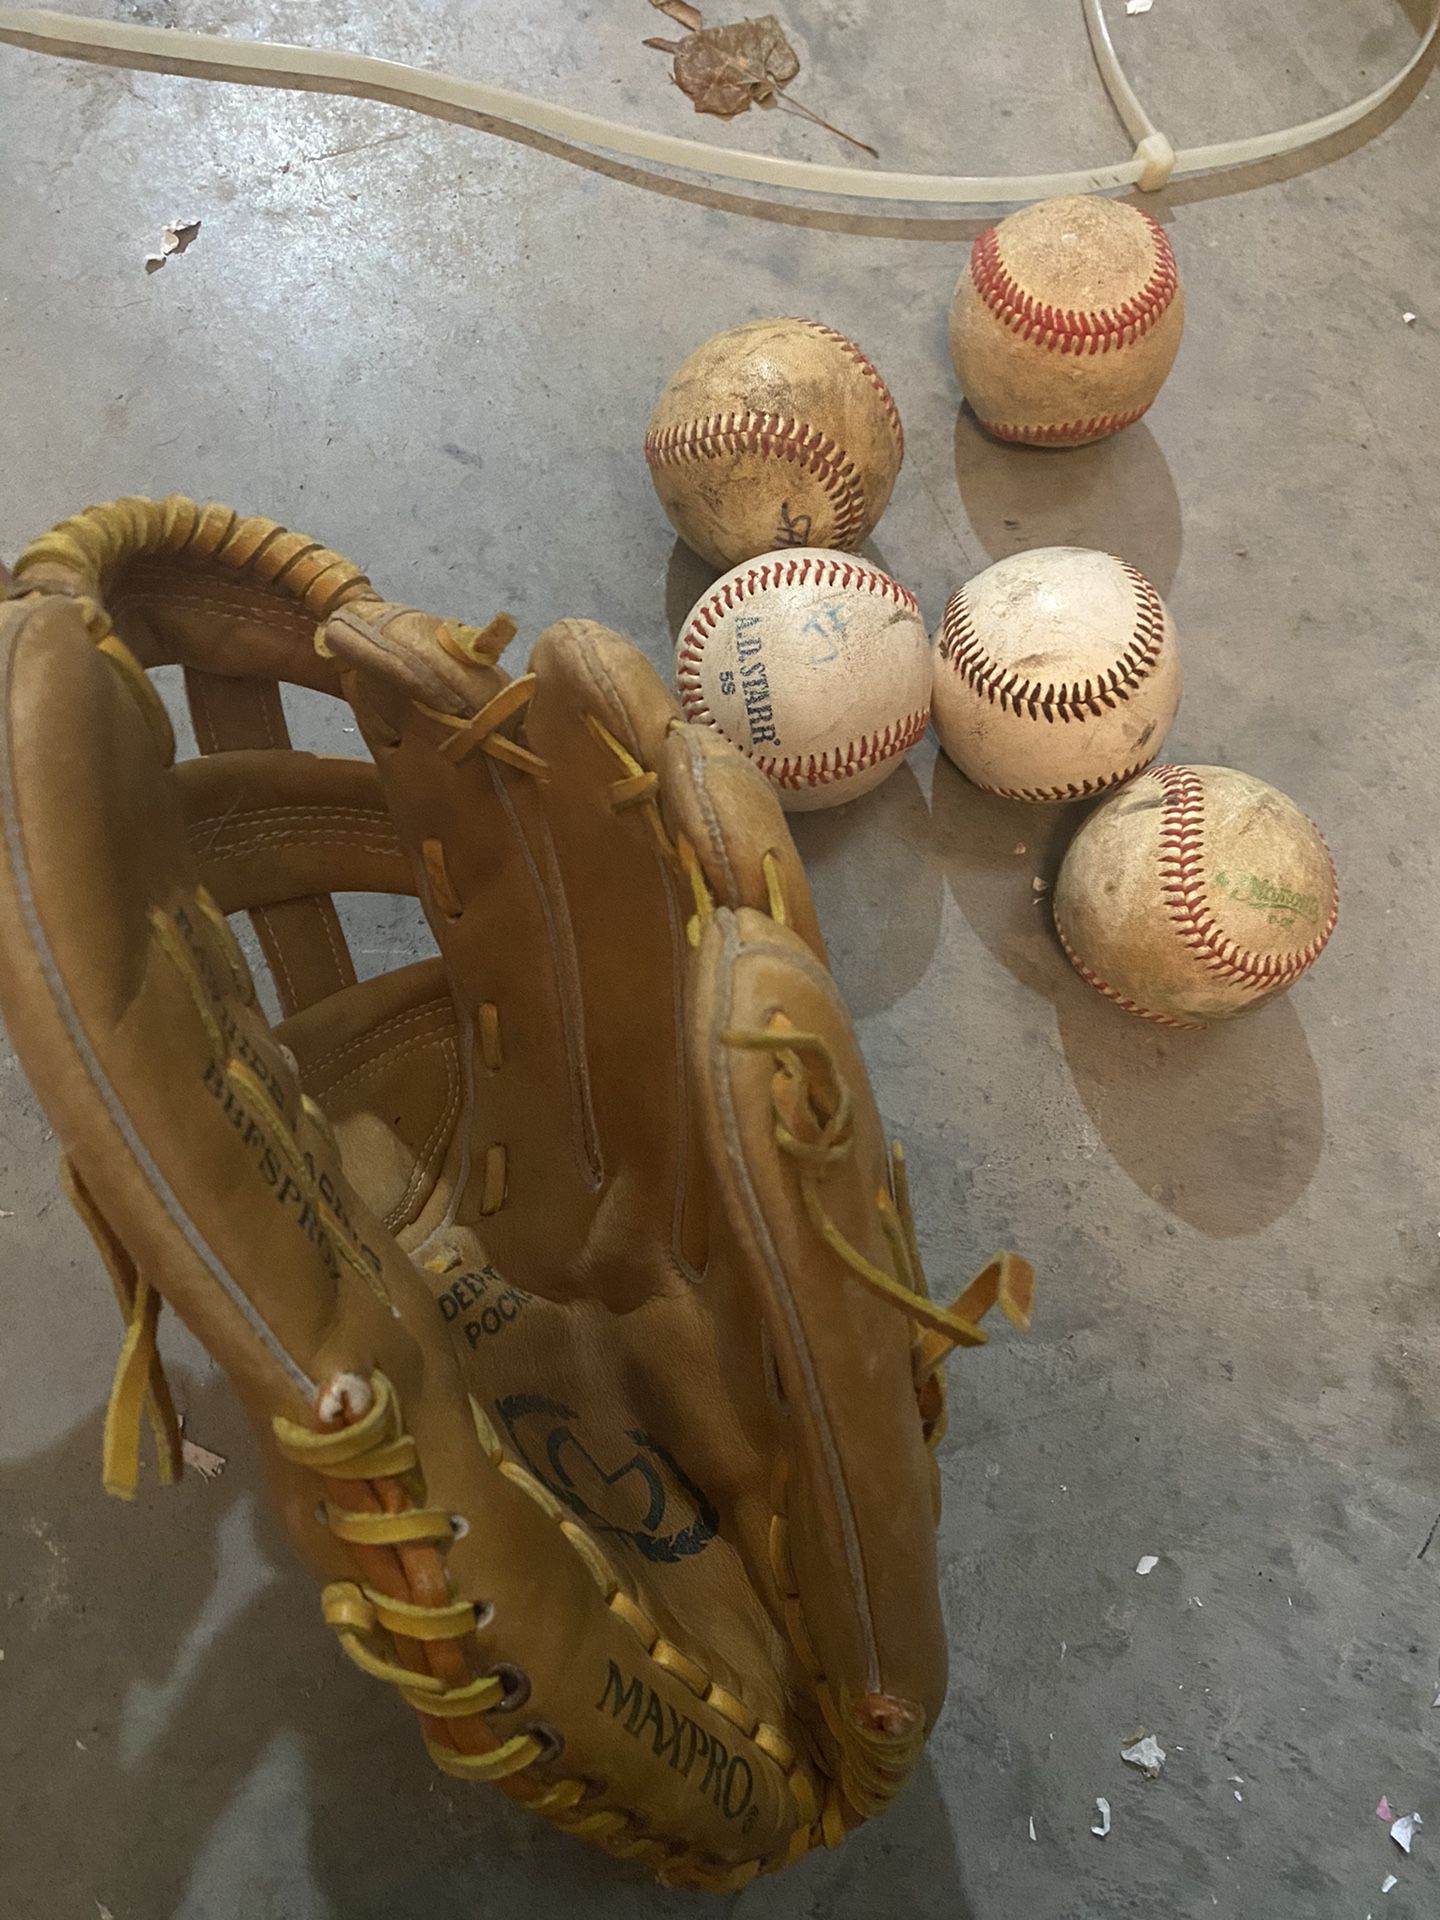 Baseball glove with balls